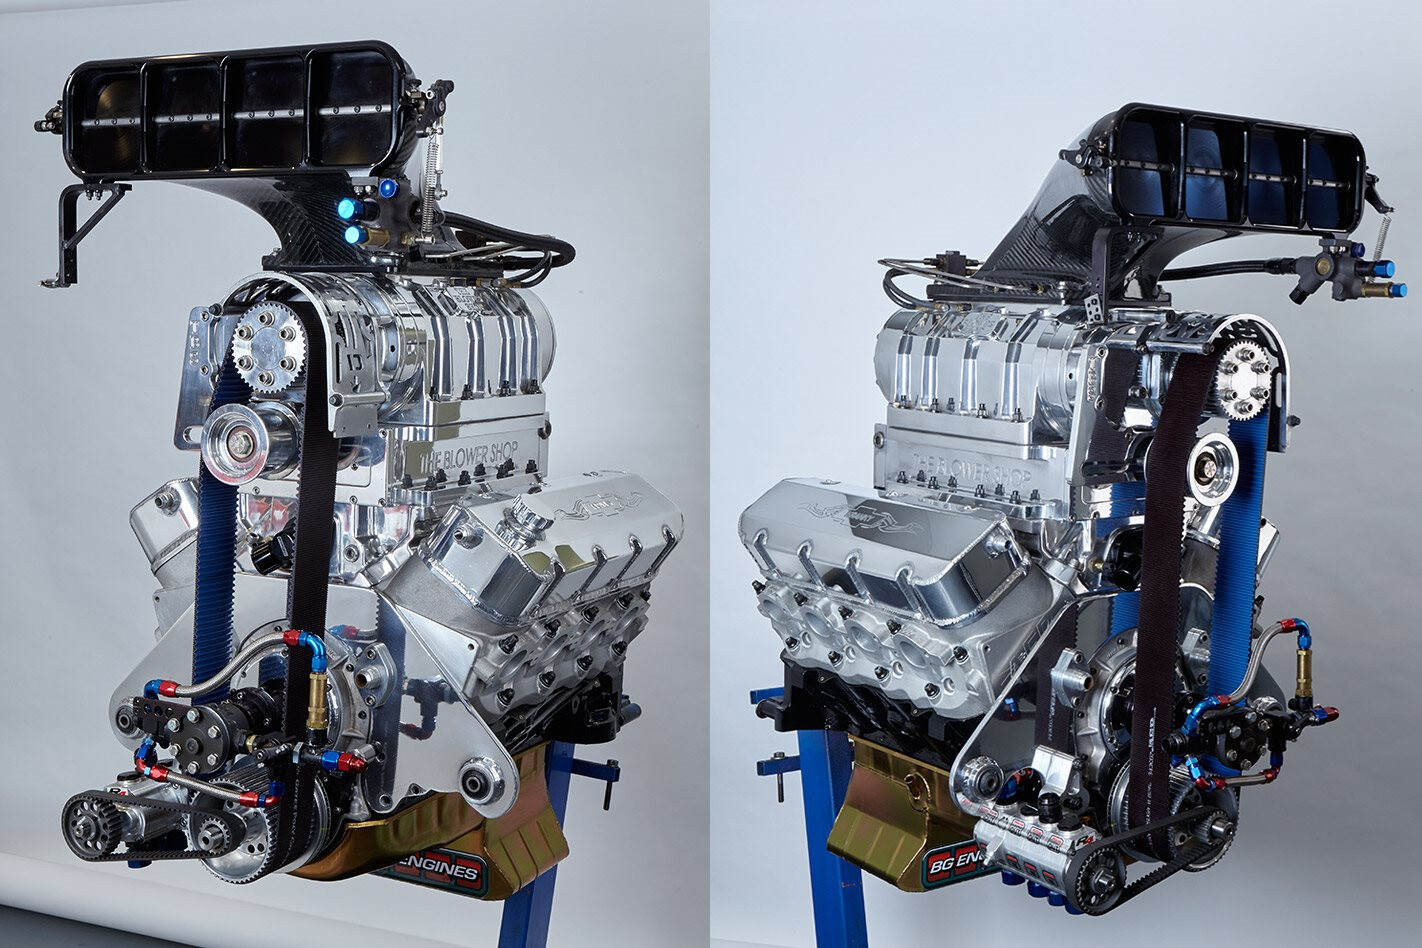 Kranky’s 515ci big-block Chev makes monster grunt on engine dyno – video